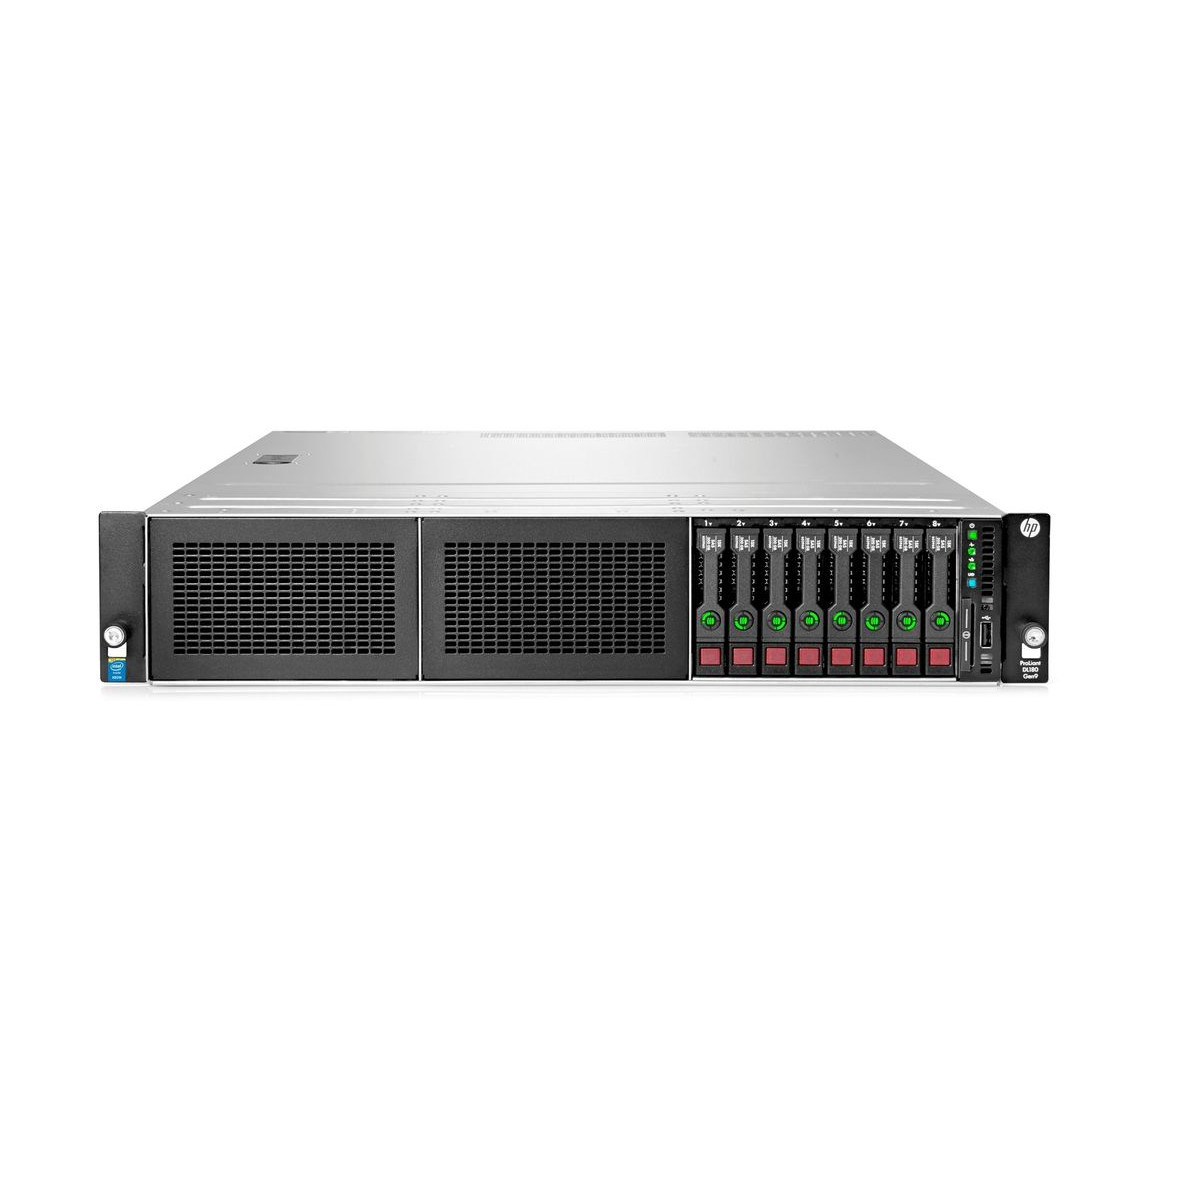 HP DL380 G9 E5-2640v3 32GB 2x960GB SSD 2xPSU P440